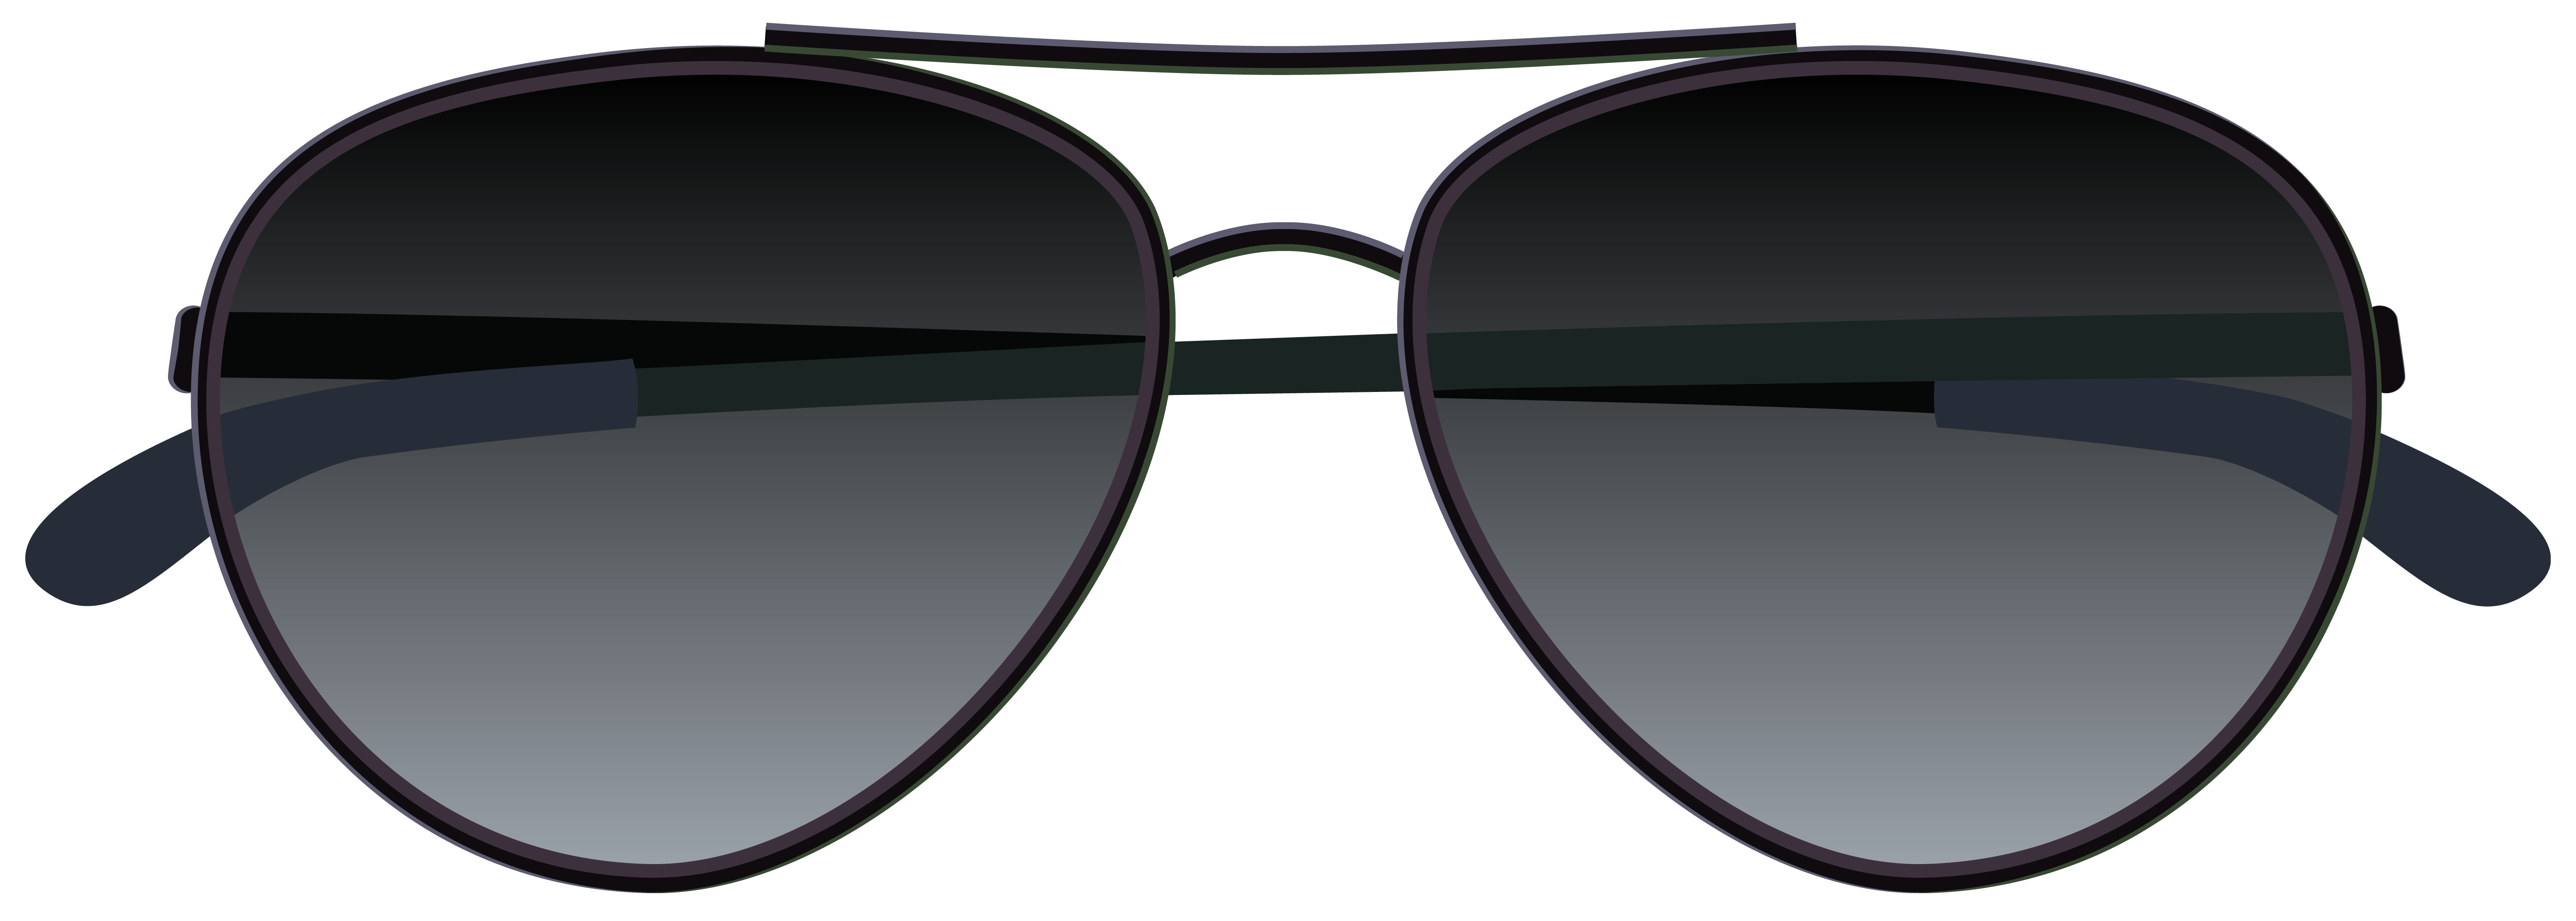 Free Sunglasses Clipart Transparent, Download Free Clip Art.